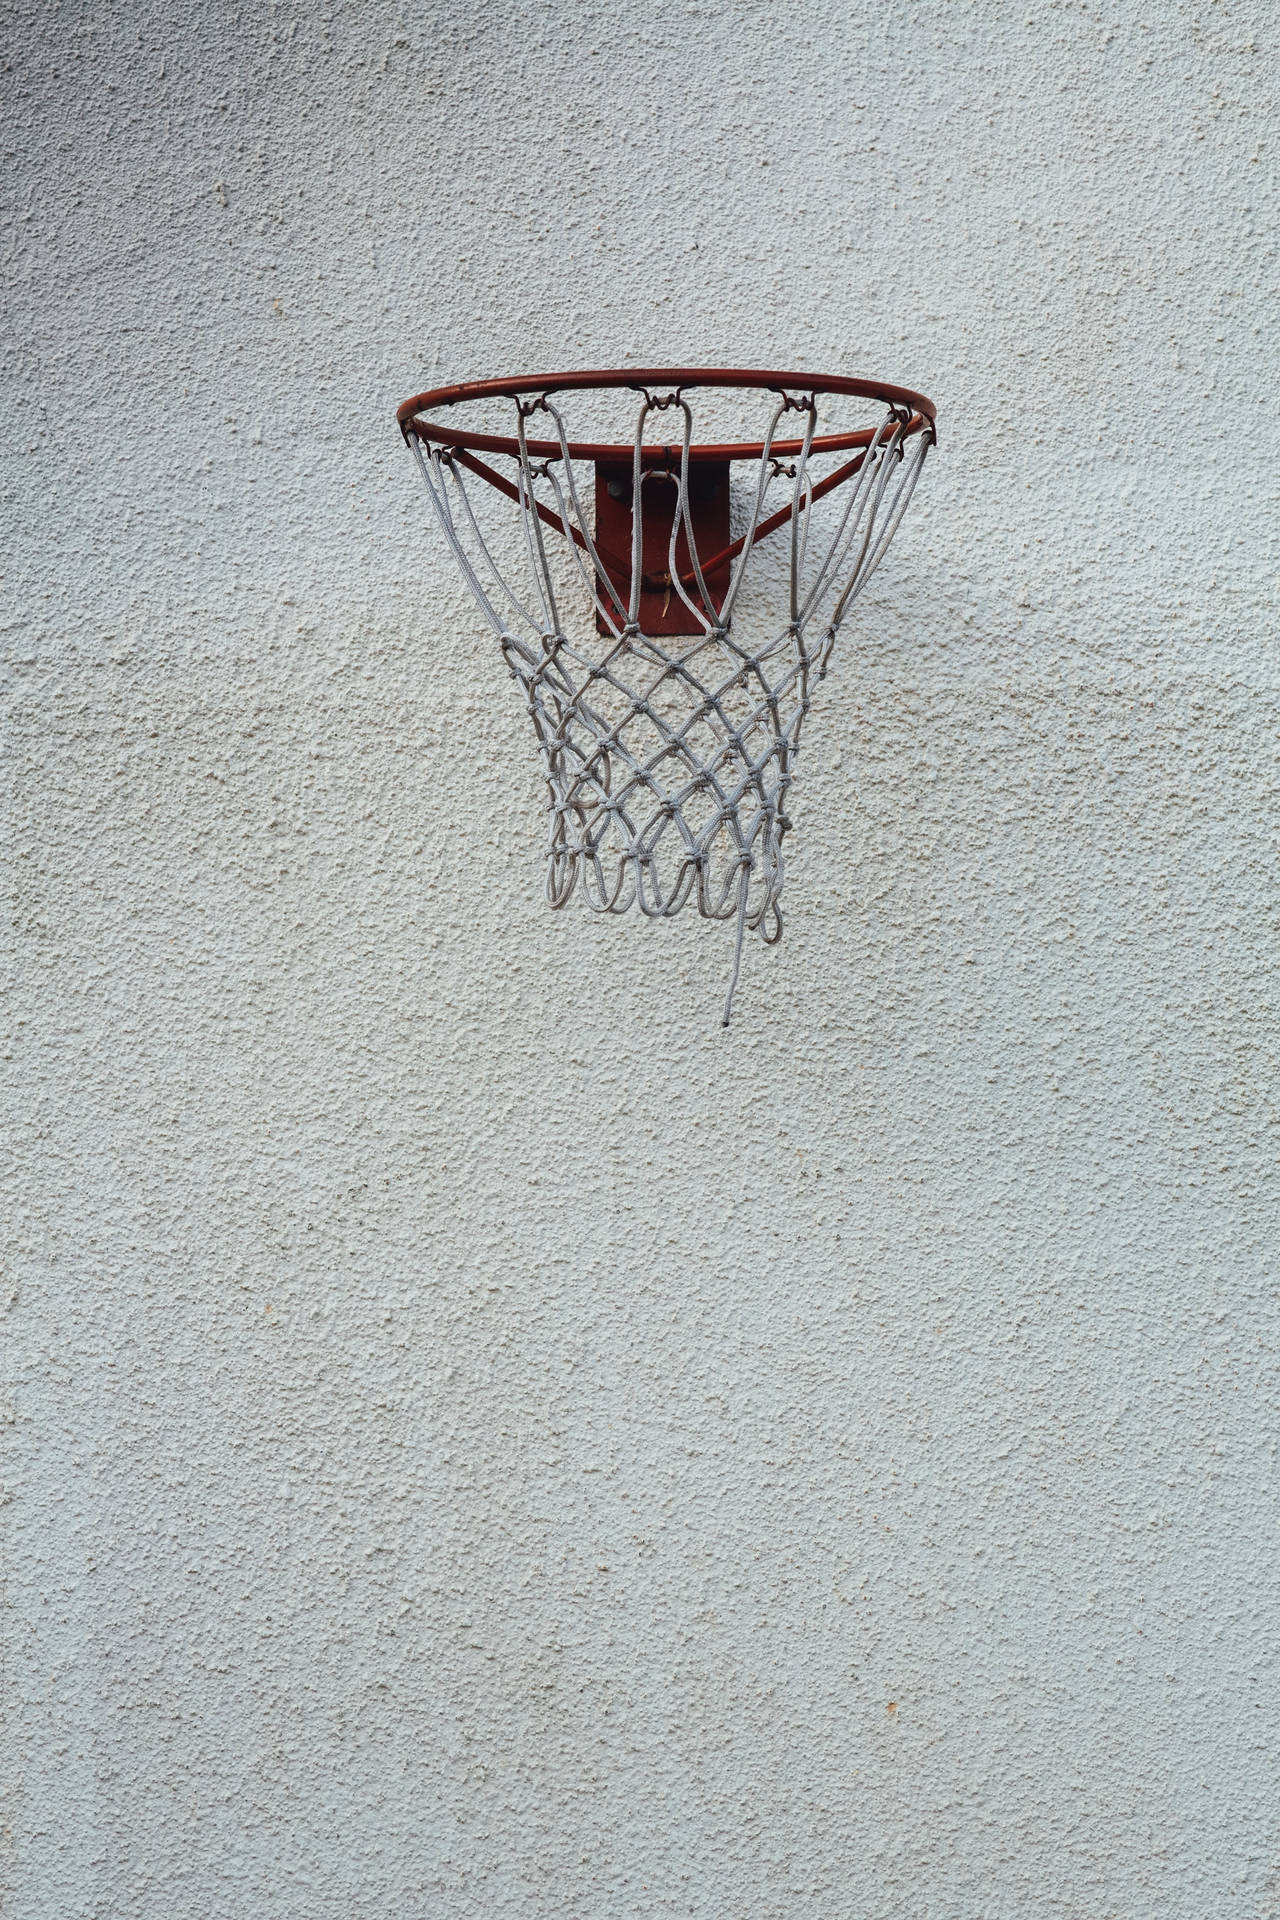 Basketball Hoop Net On White Wall Wallpaper